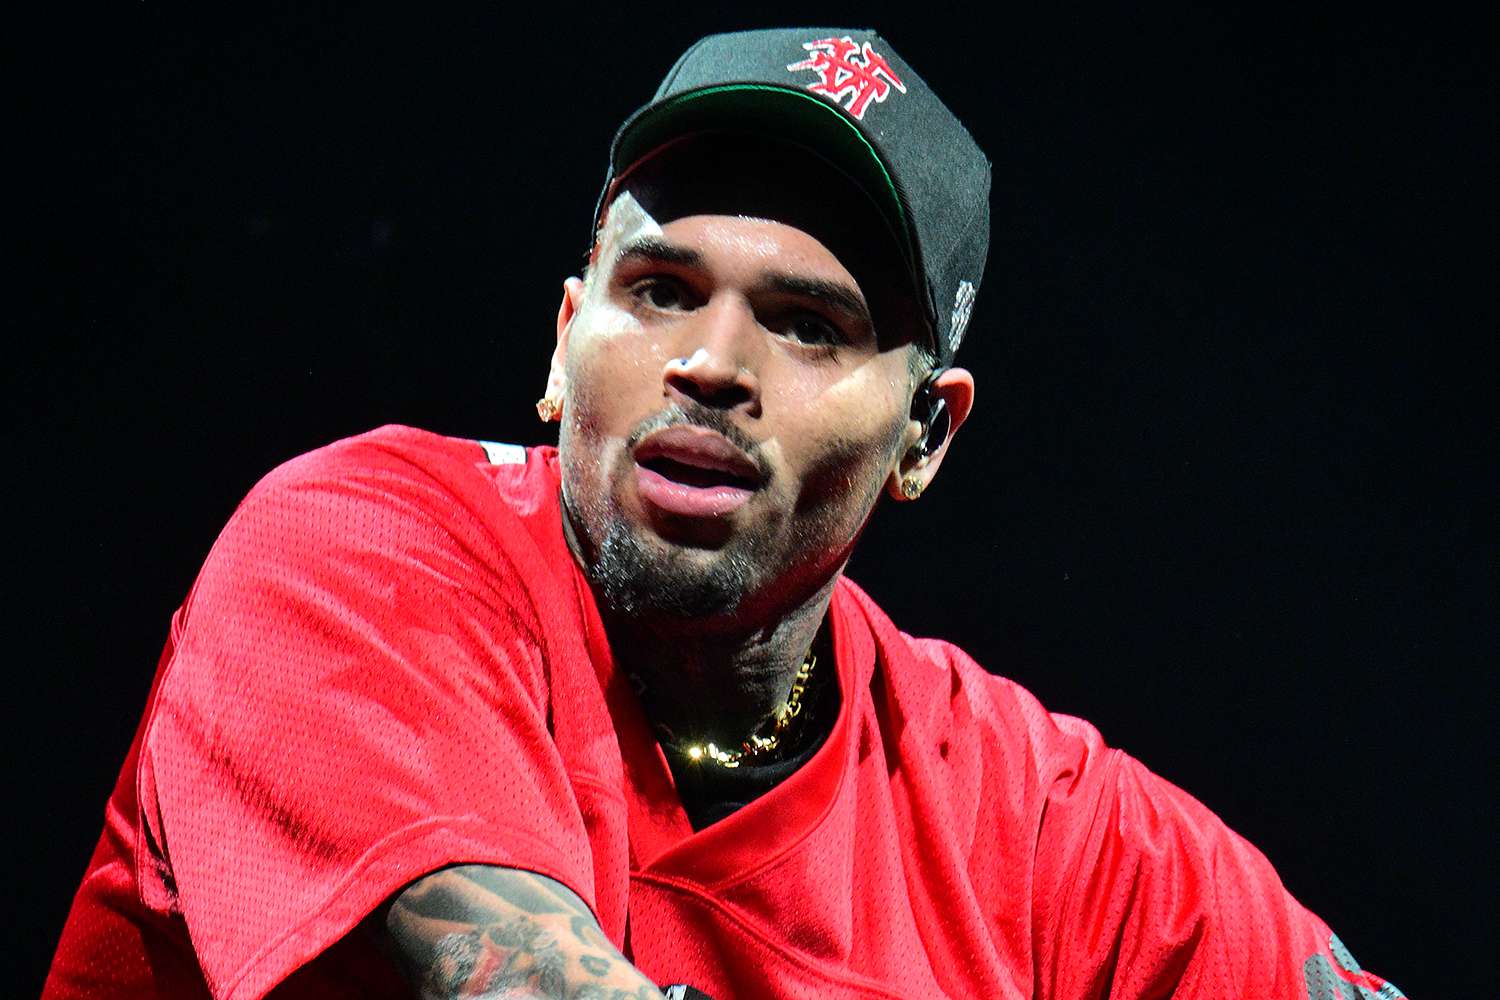 Chris Brown Sued for $50 Million over Claims of 'Brutal, Violent Assault' of 4 Concertgoers After Fort Worth Show